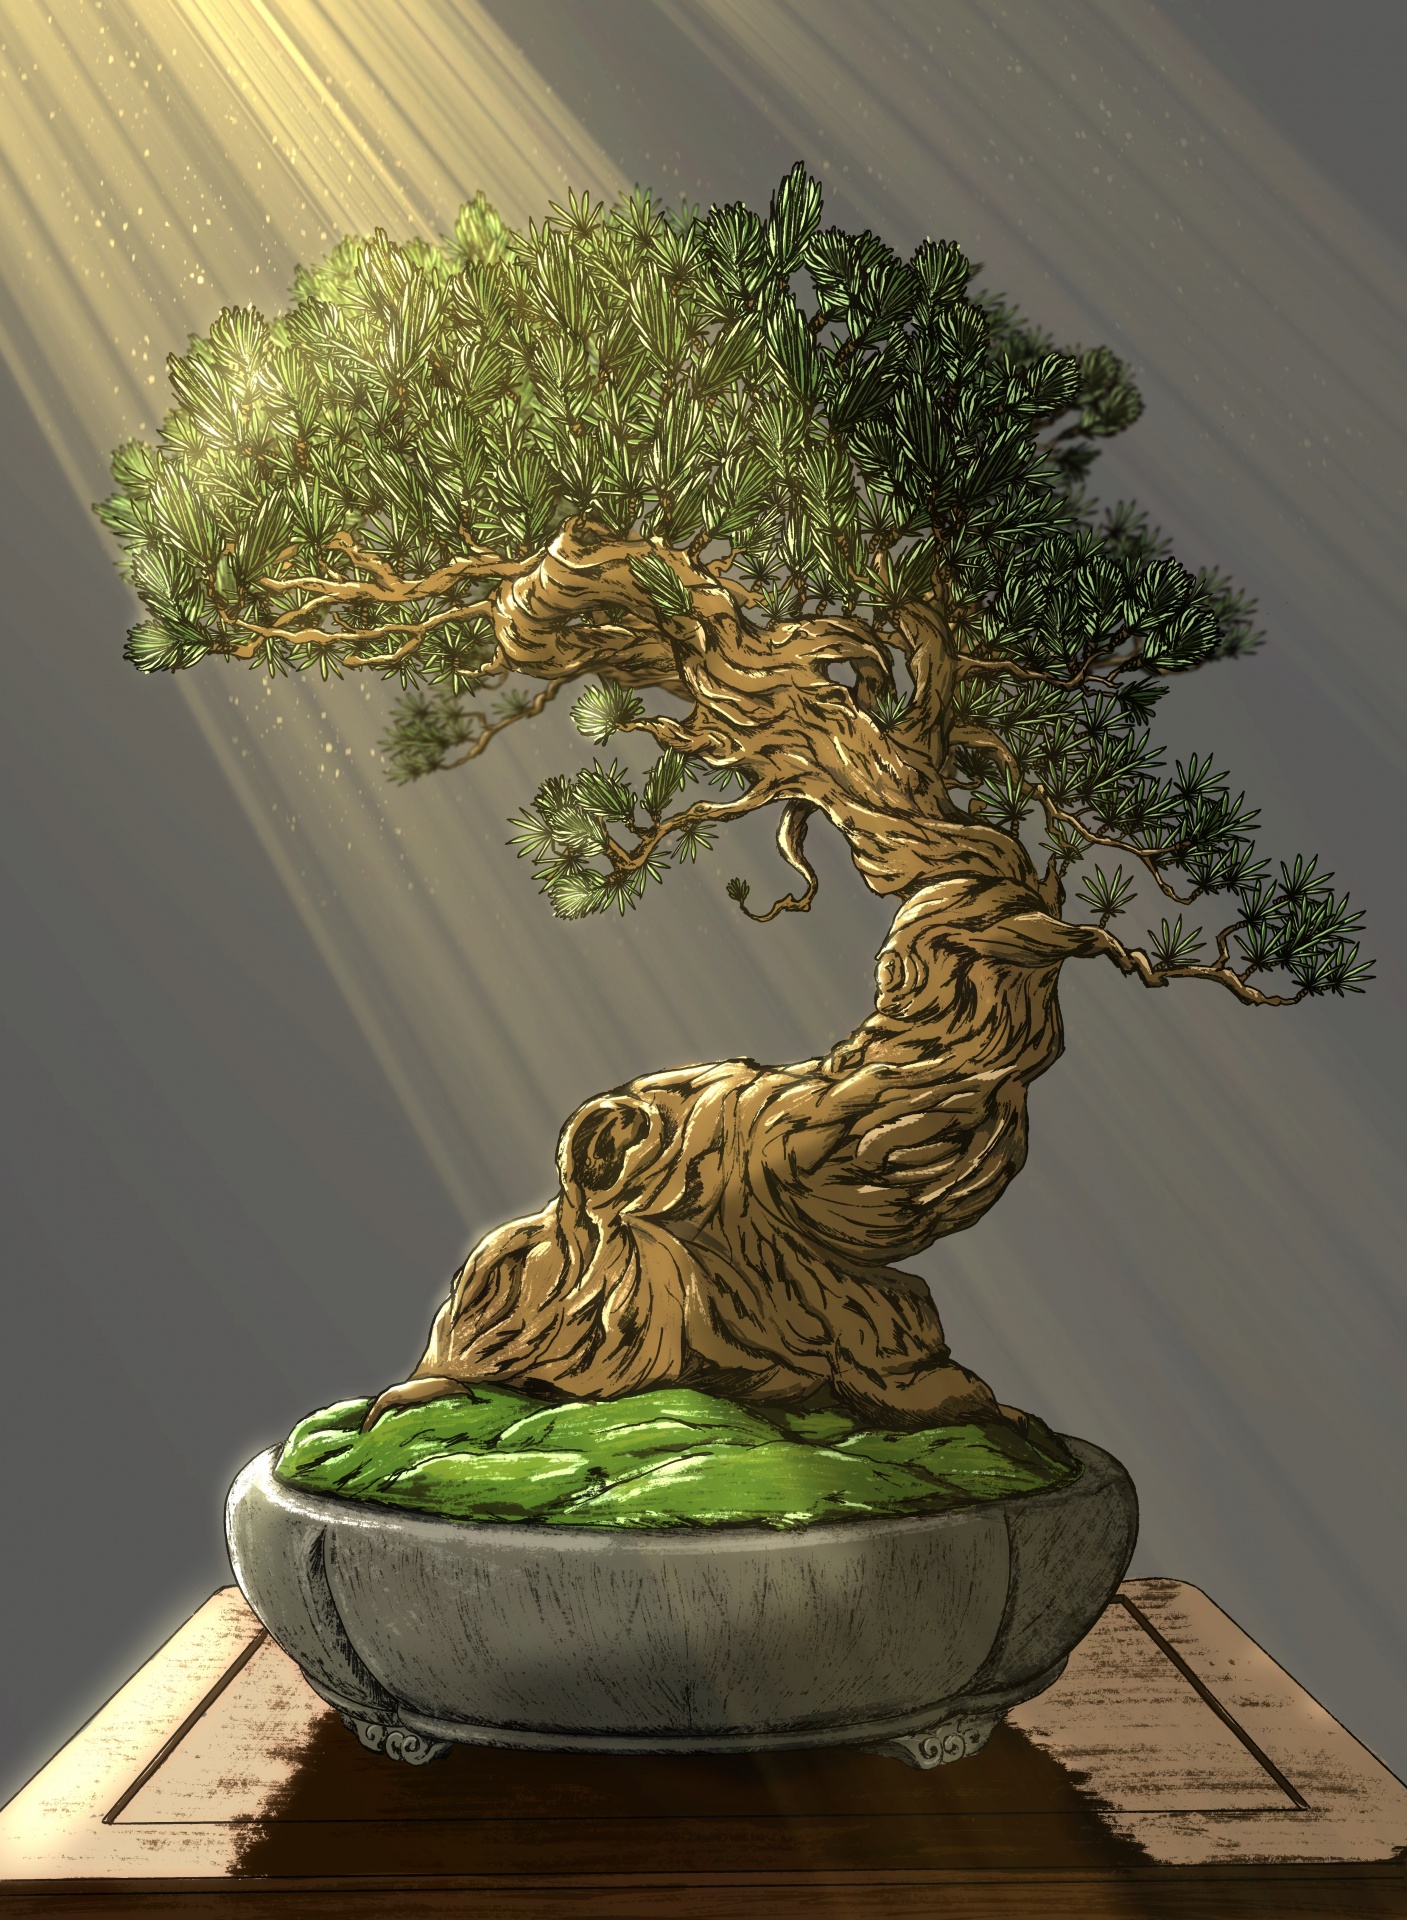 Hand drawing a bonsai tree